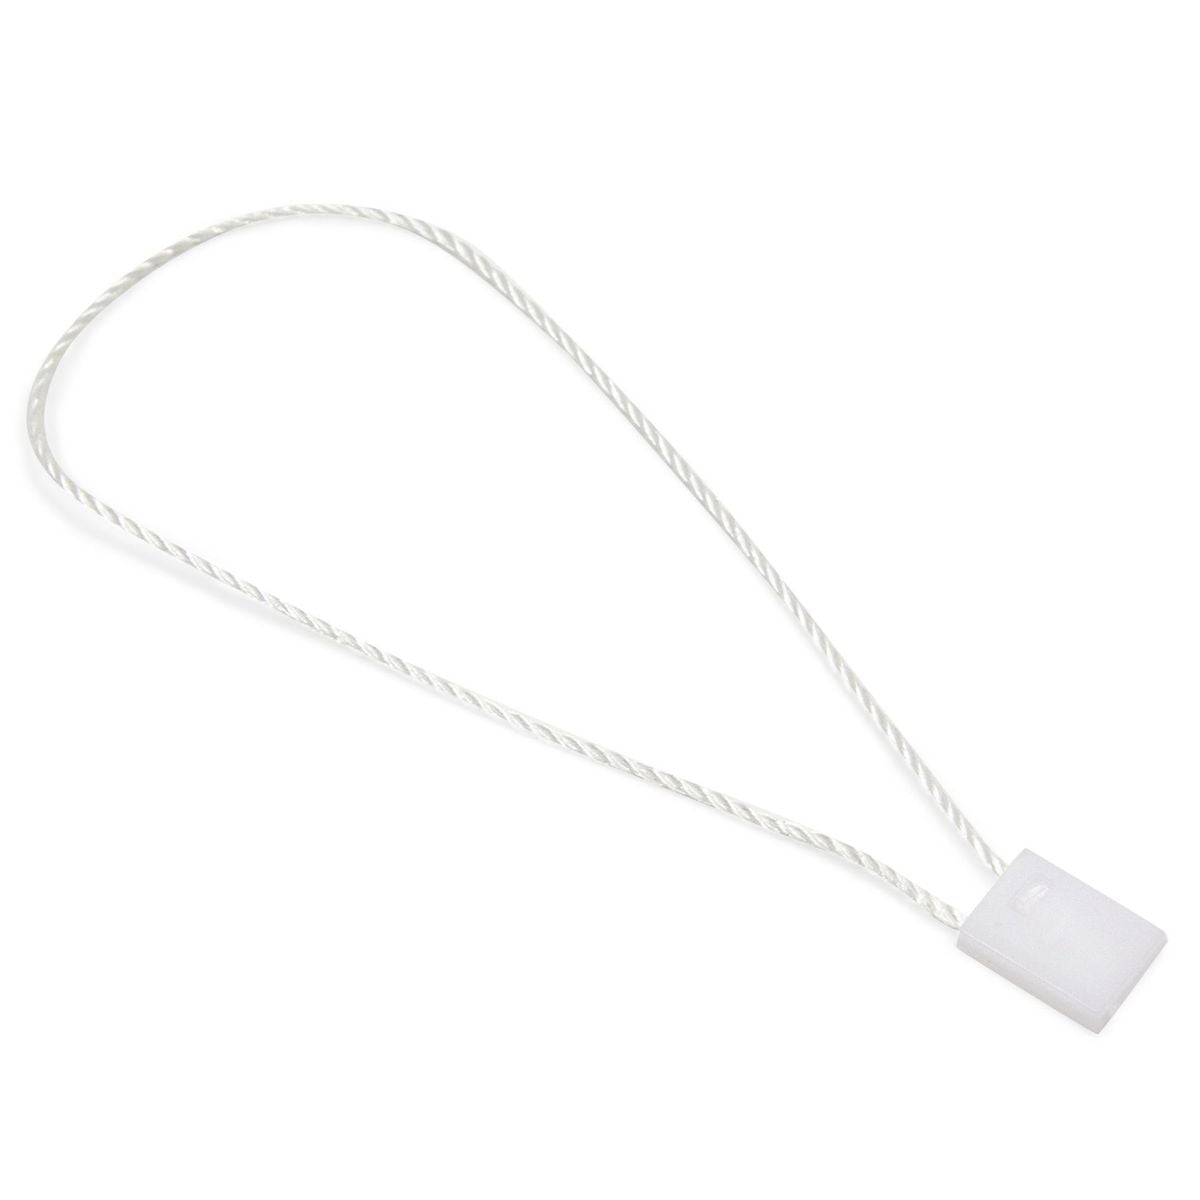 7 Inch Black Nylon Hang Tag String Snap Lock Pin Plastic Fasteners 1500 Pieces 